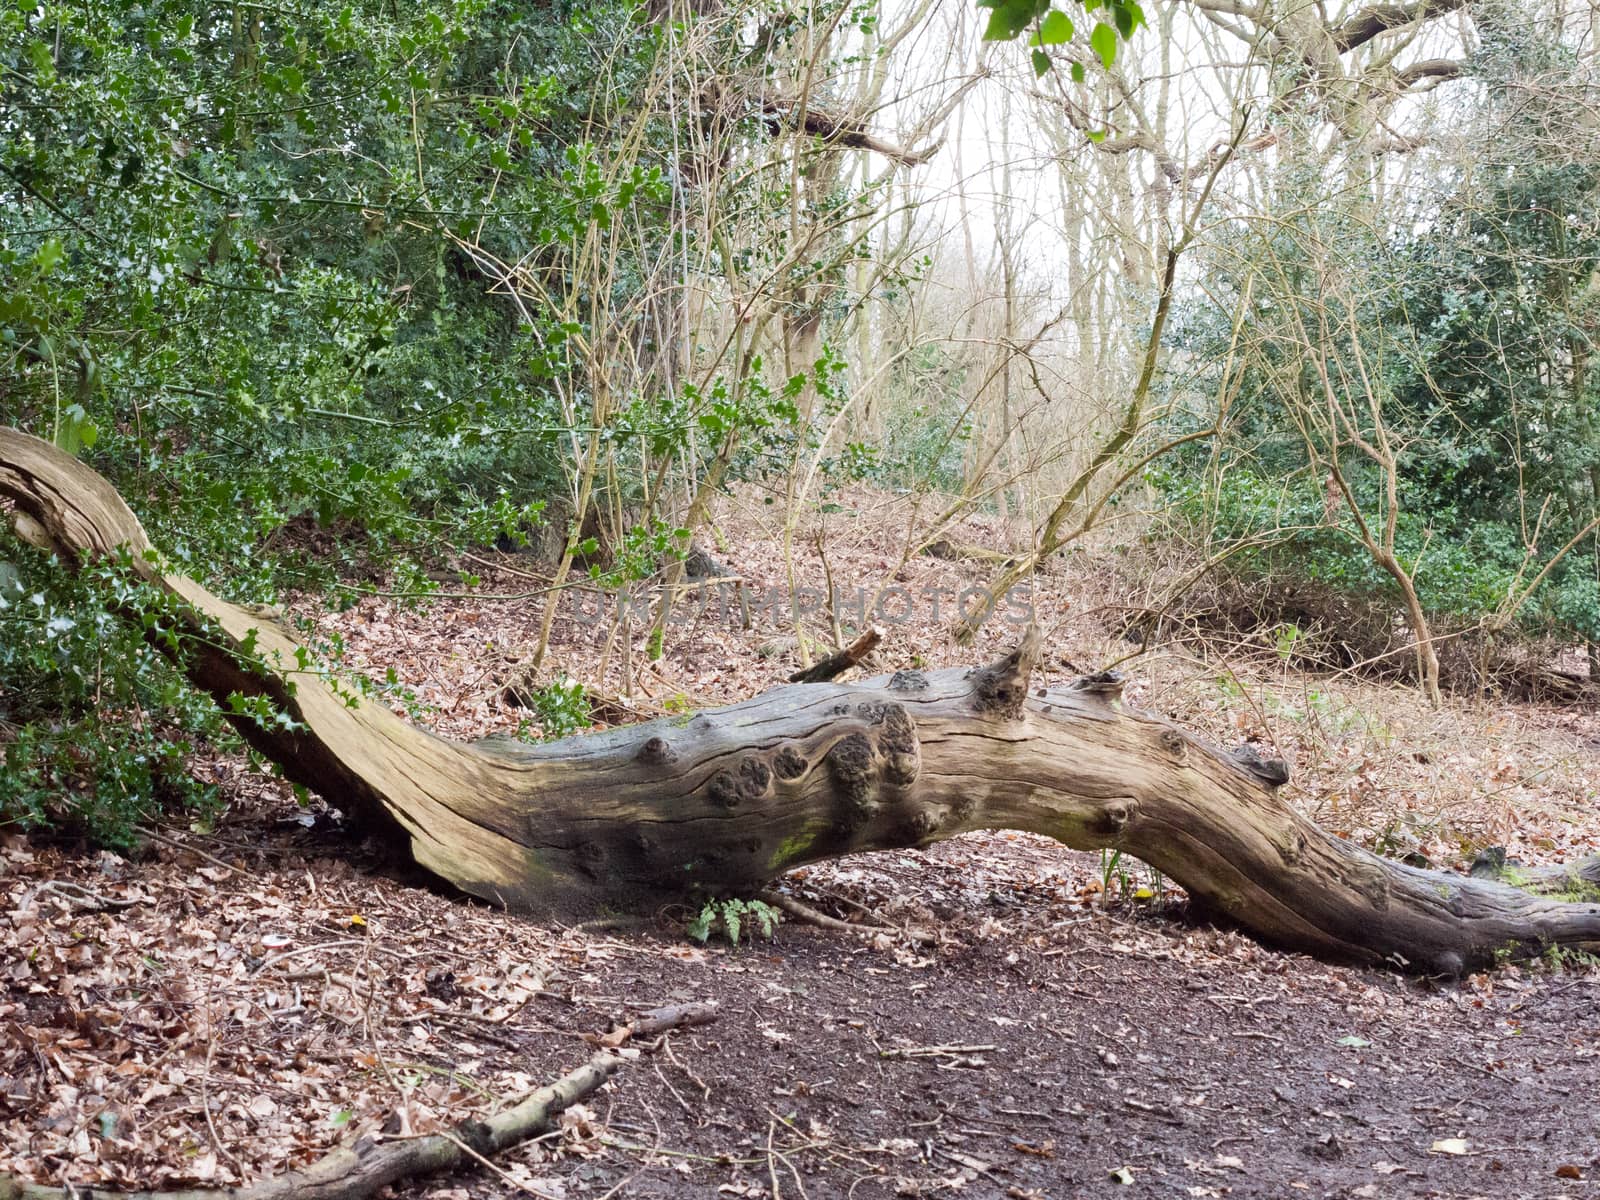 fallen tree trunk inside forest wood in way of path by callumrc